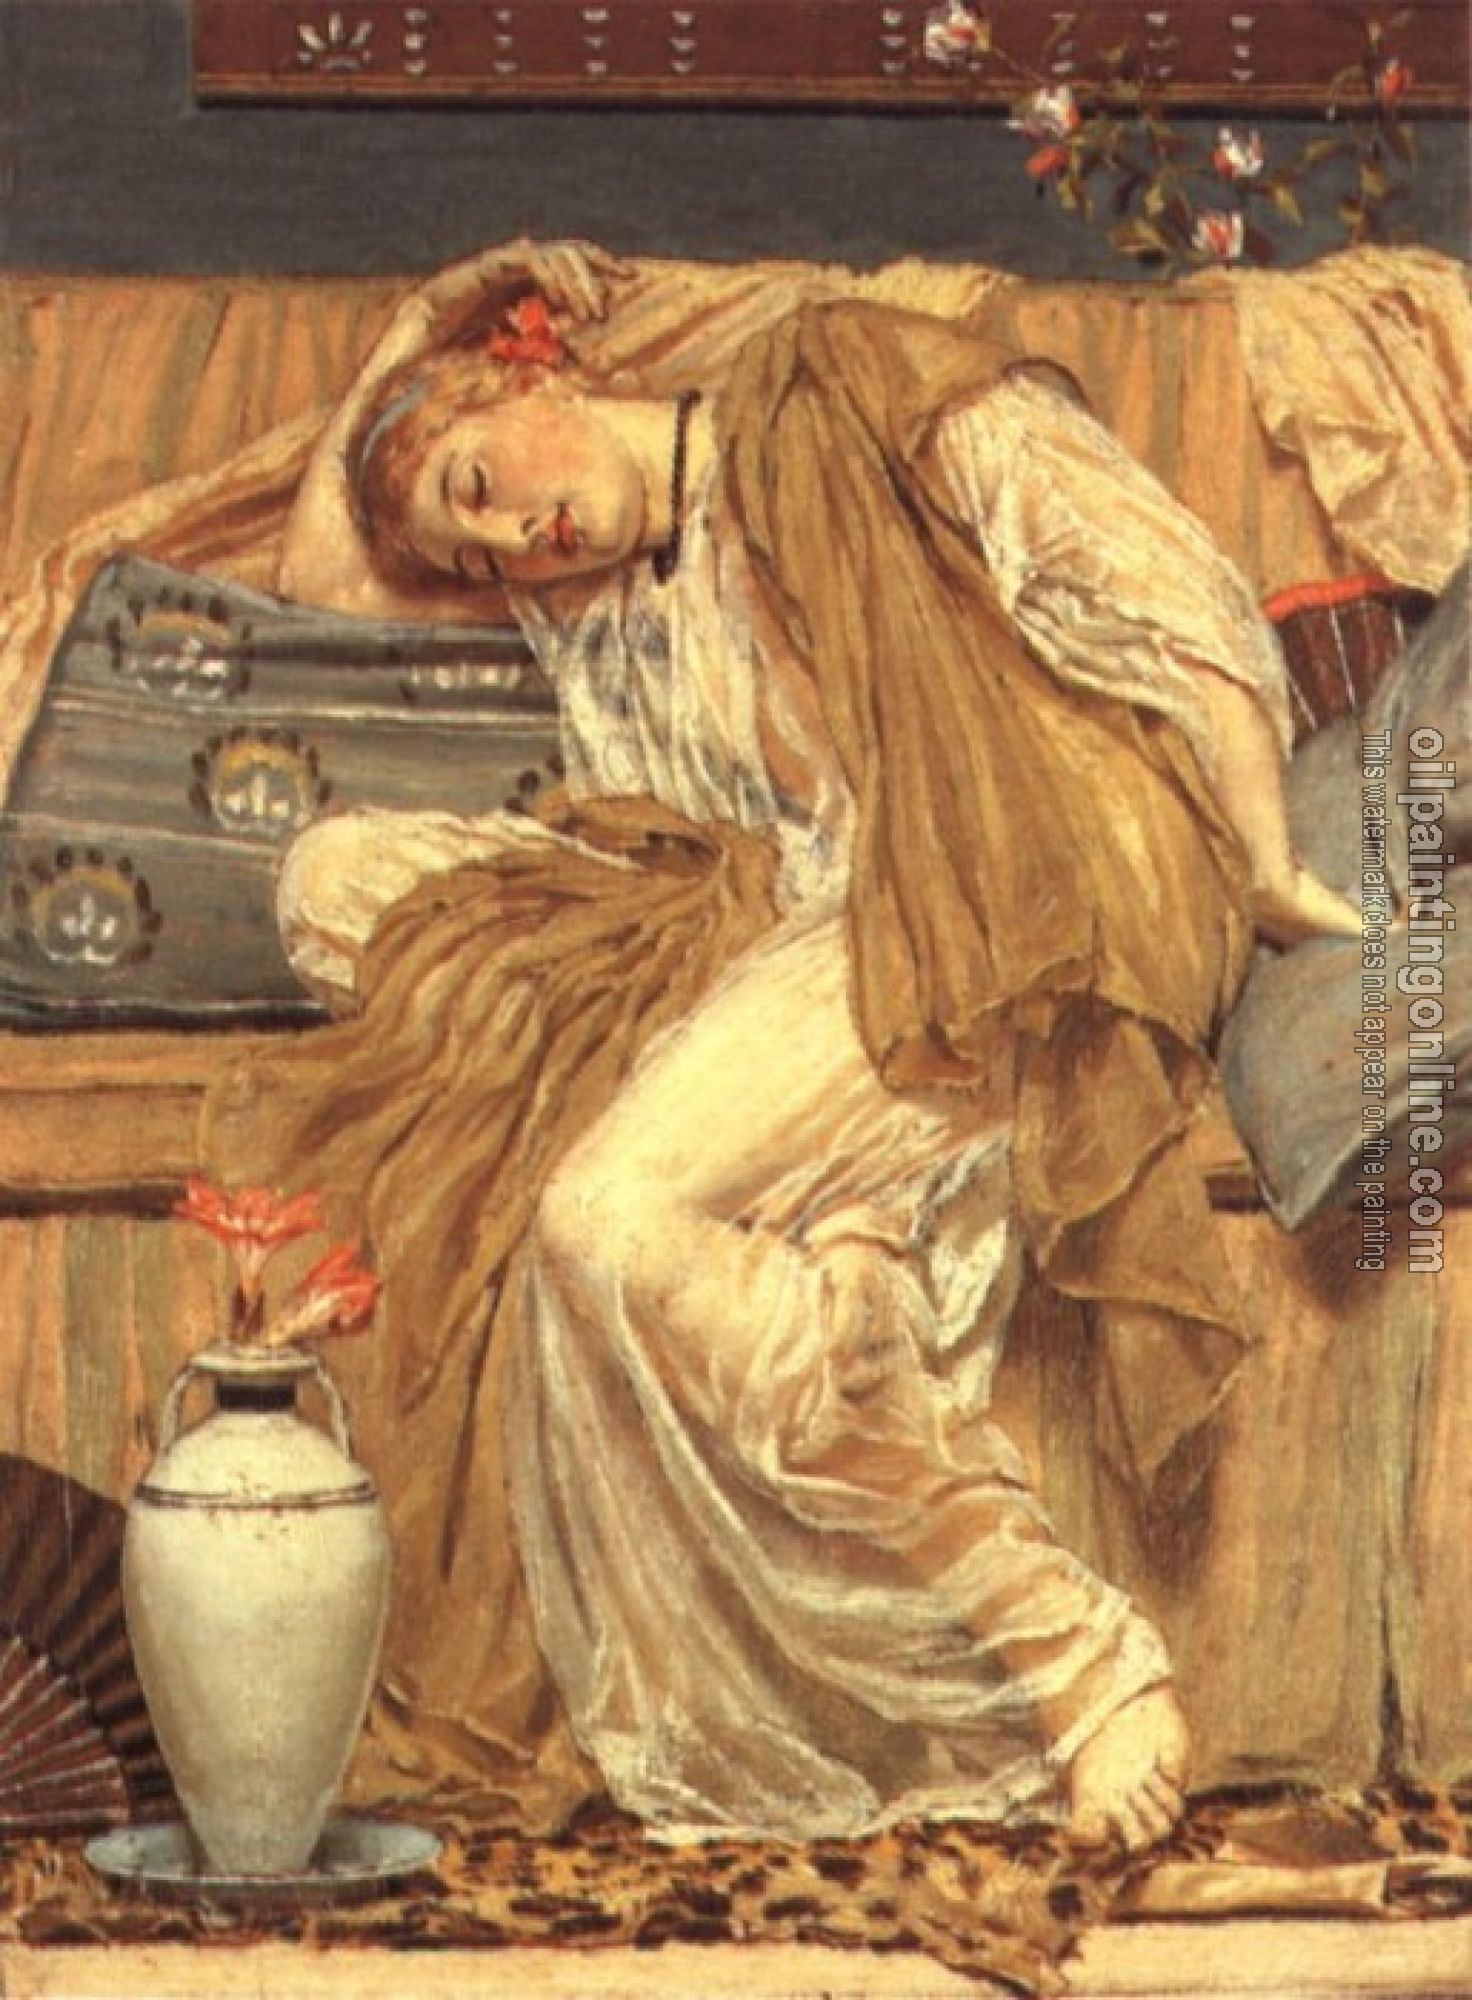 Moore, Albert Joseph - A Sleeping Girl